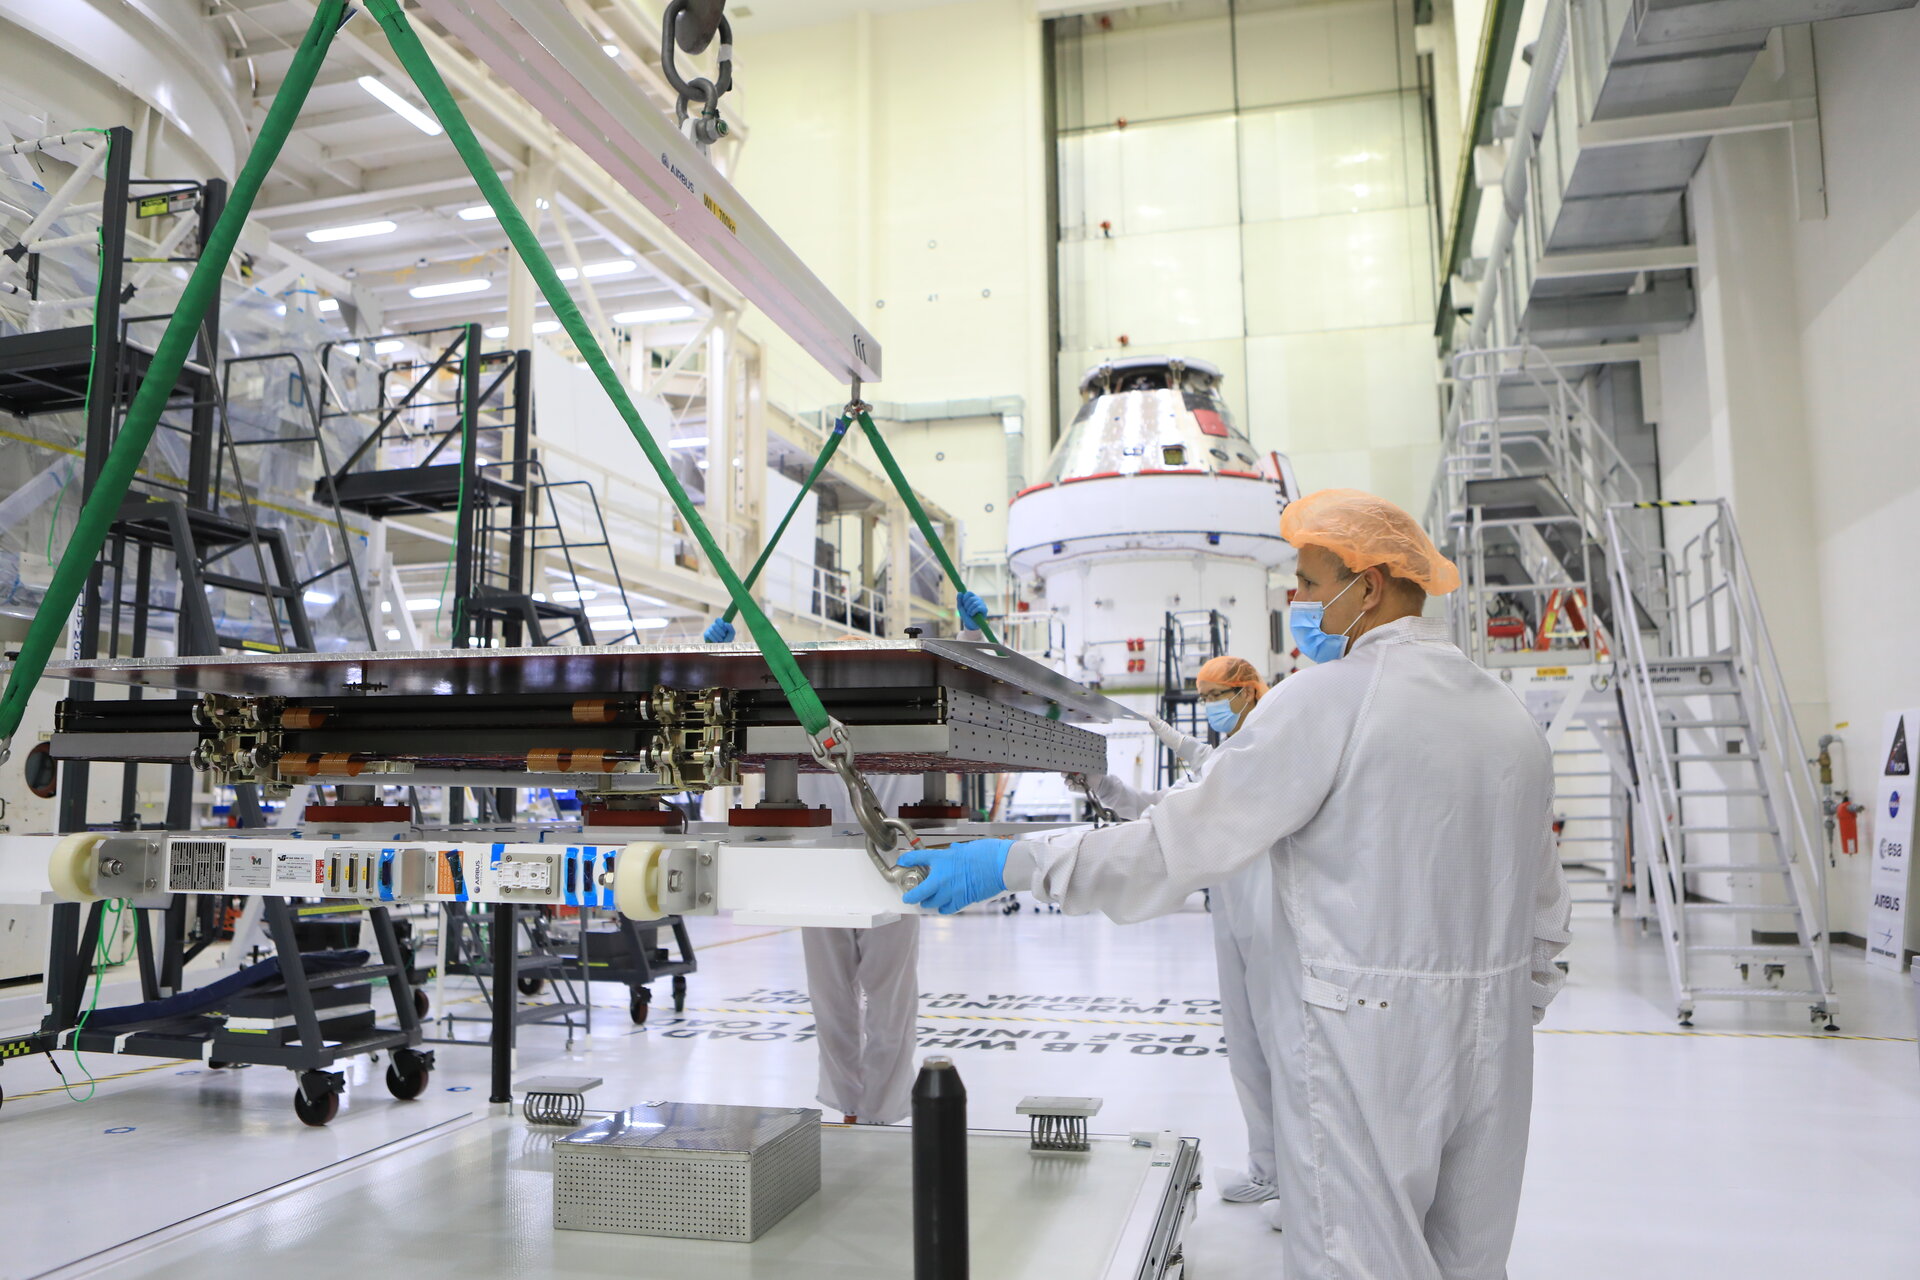 Installing solar wings on Orion